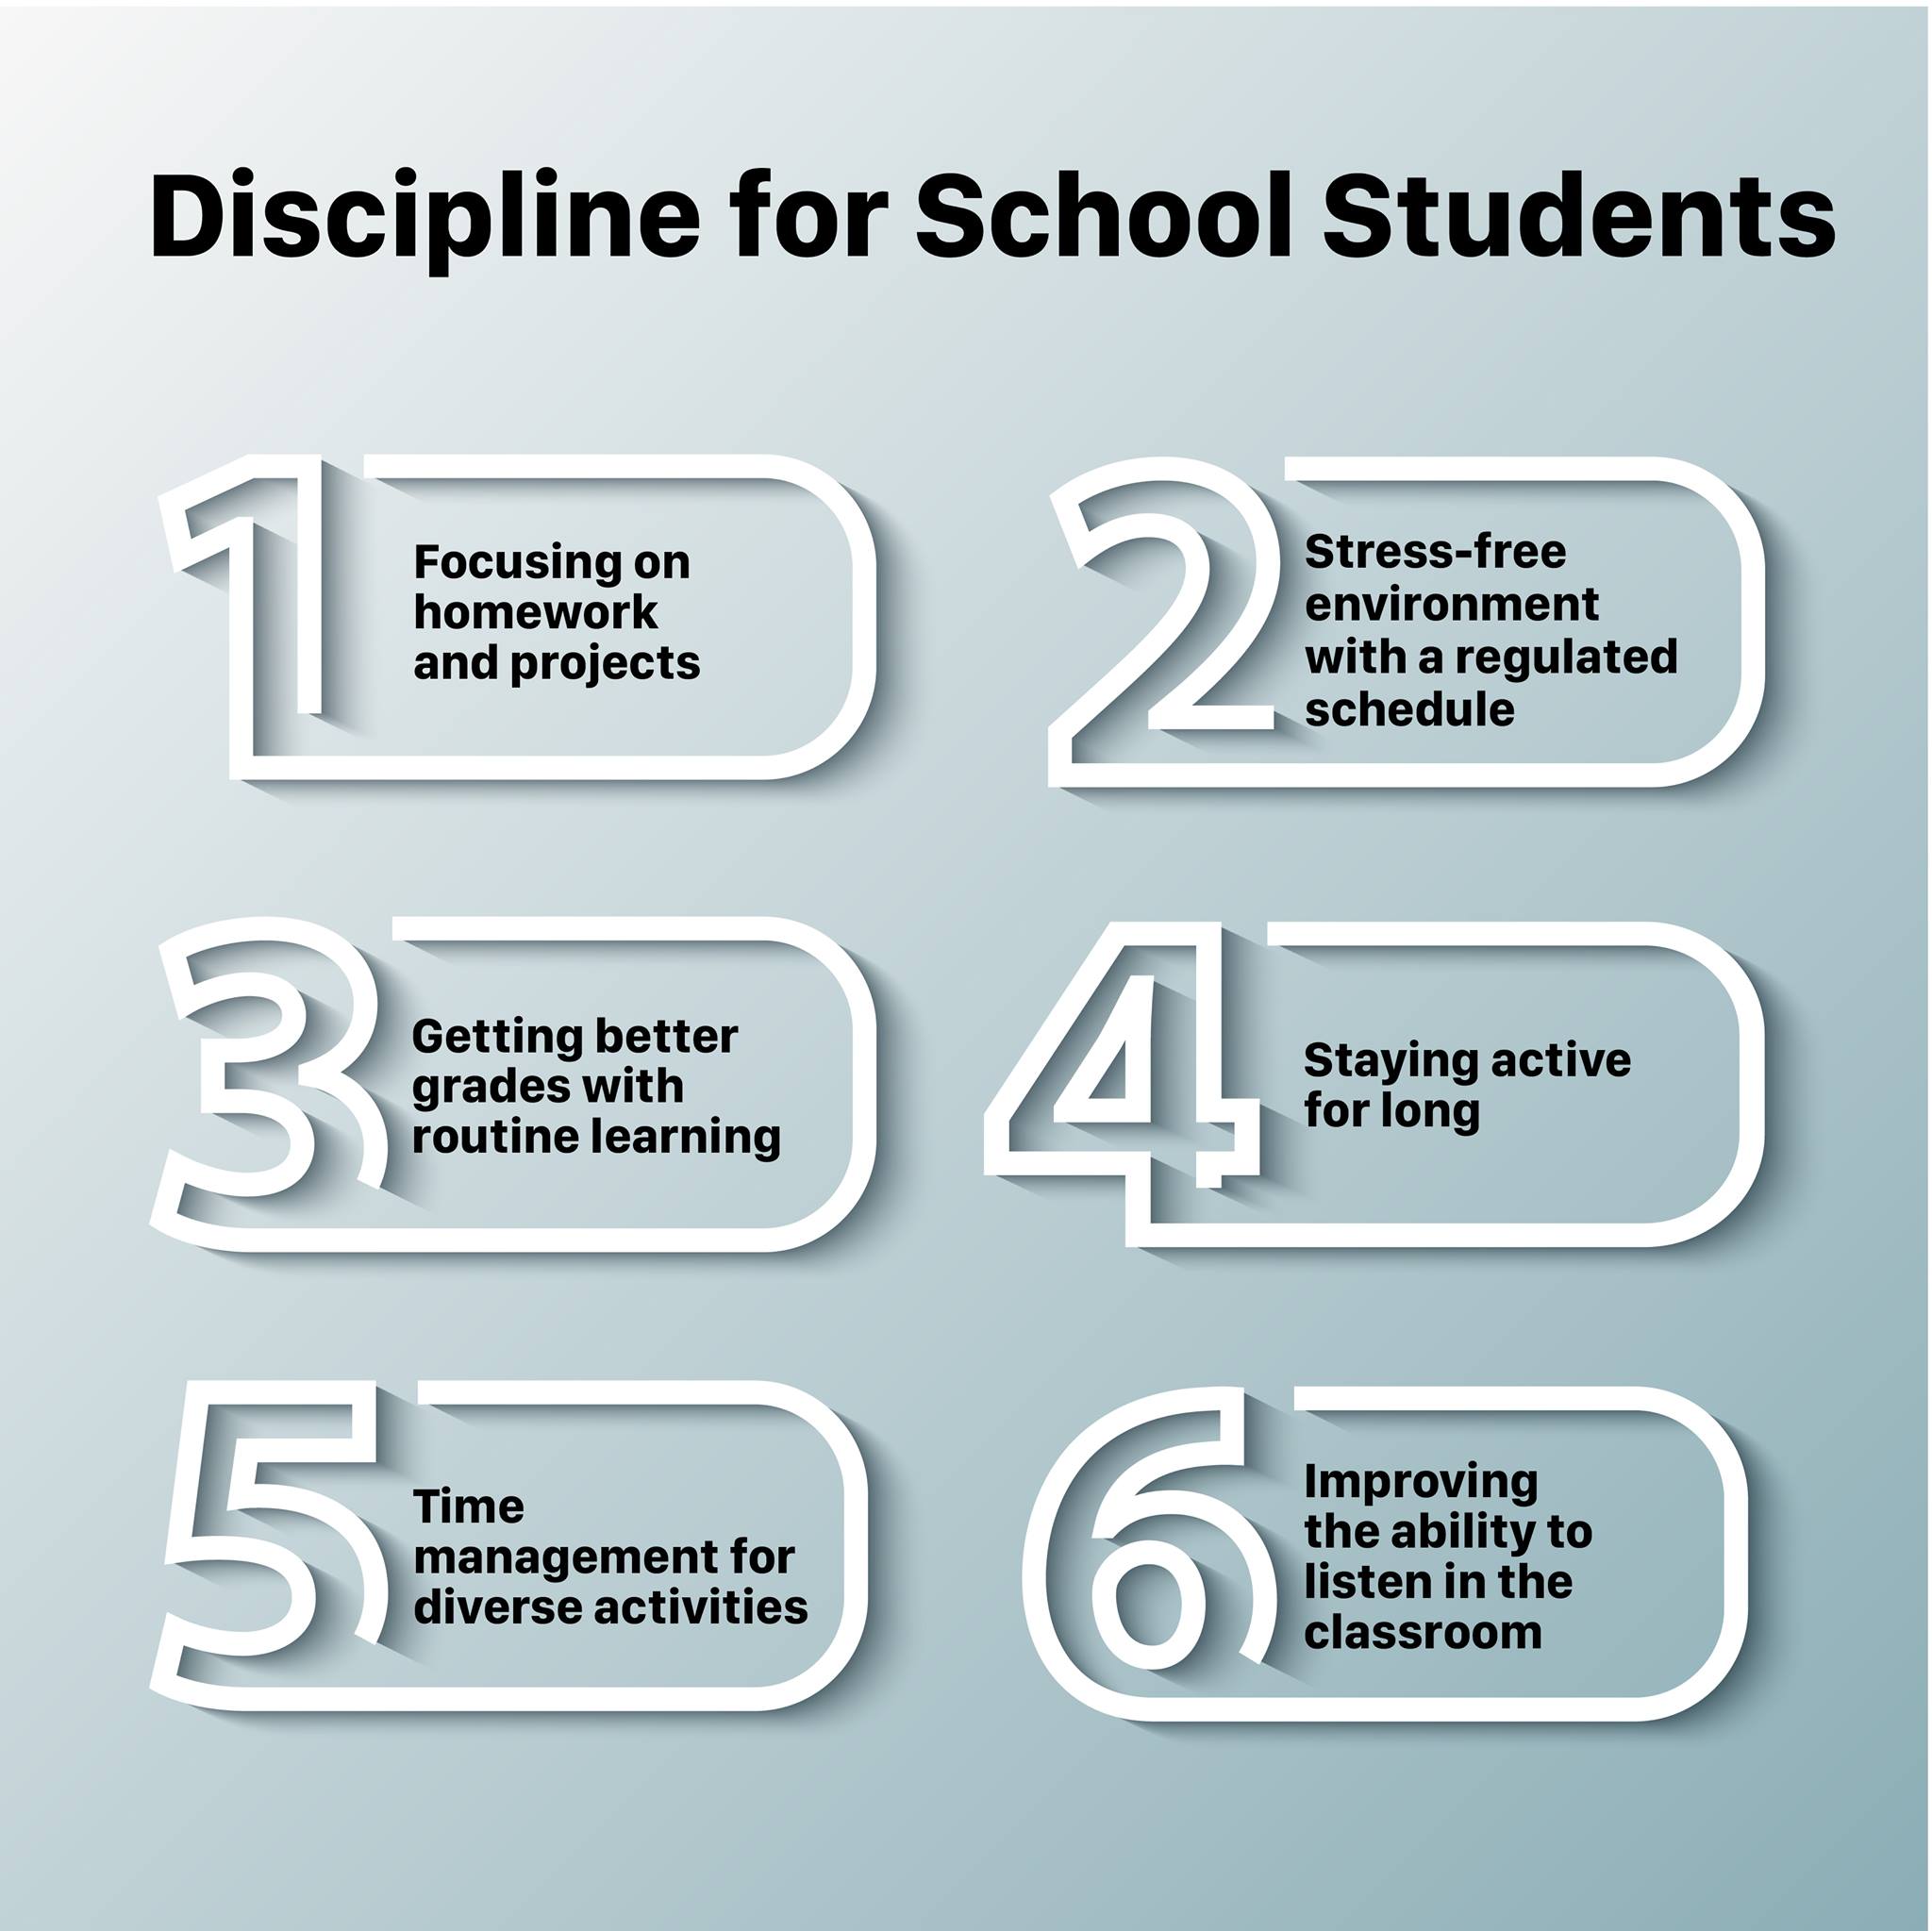 valued-based-education-in-schools-value-of-discipline-in-school-life